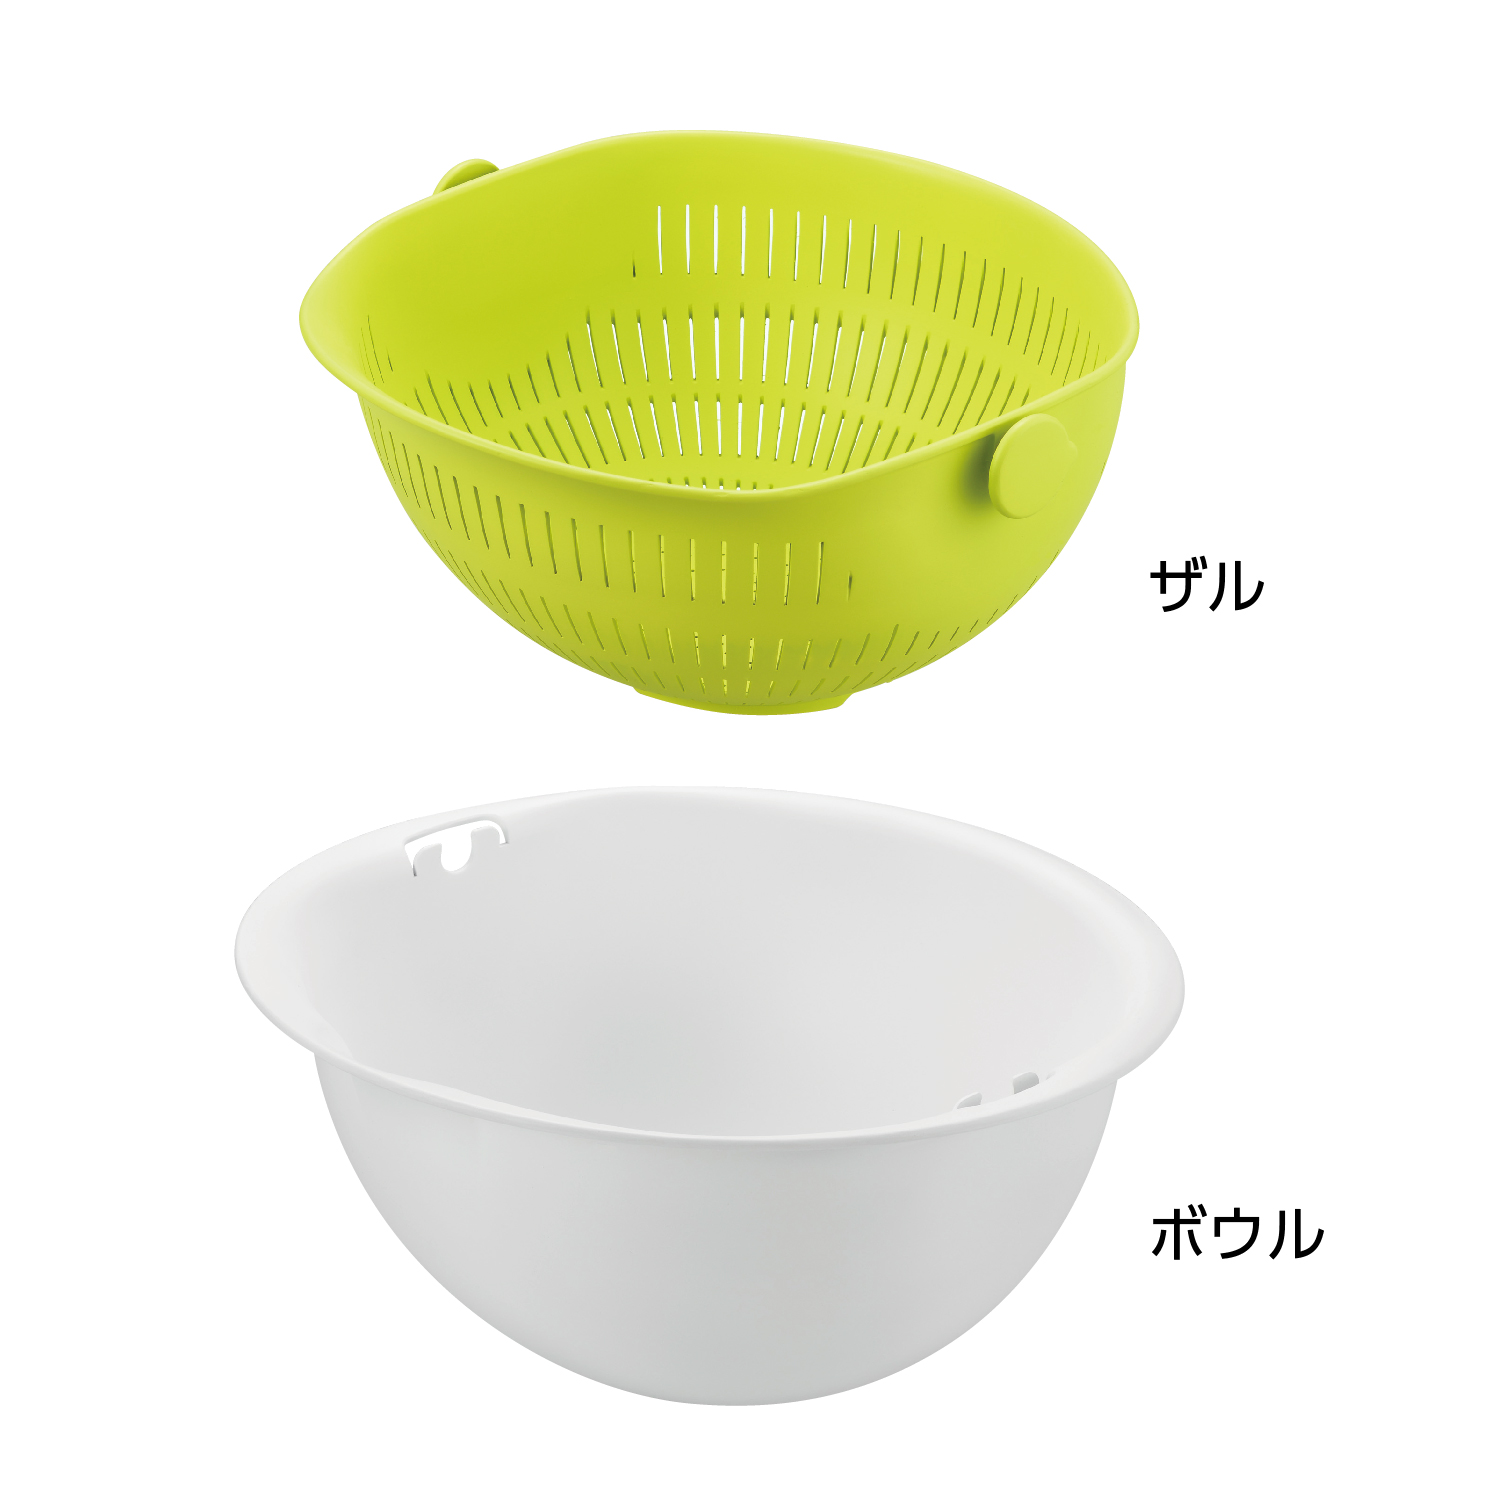 Miracle Colander Bowl Large / Akebono Industry Co., Ltd.